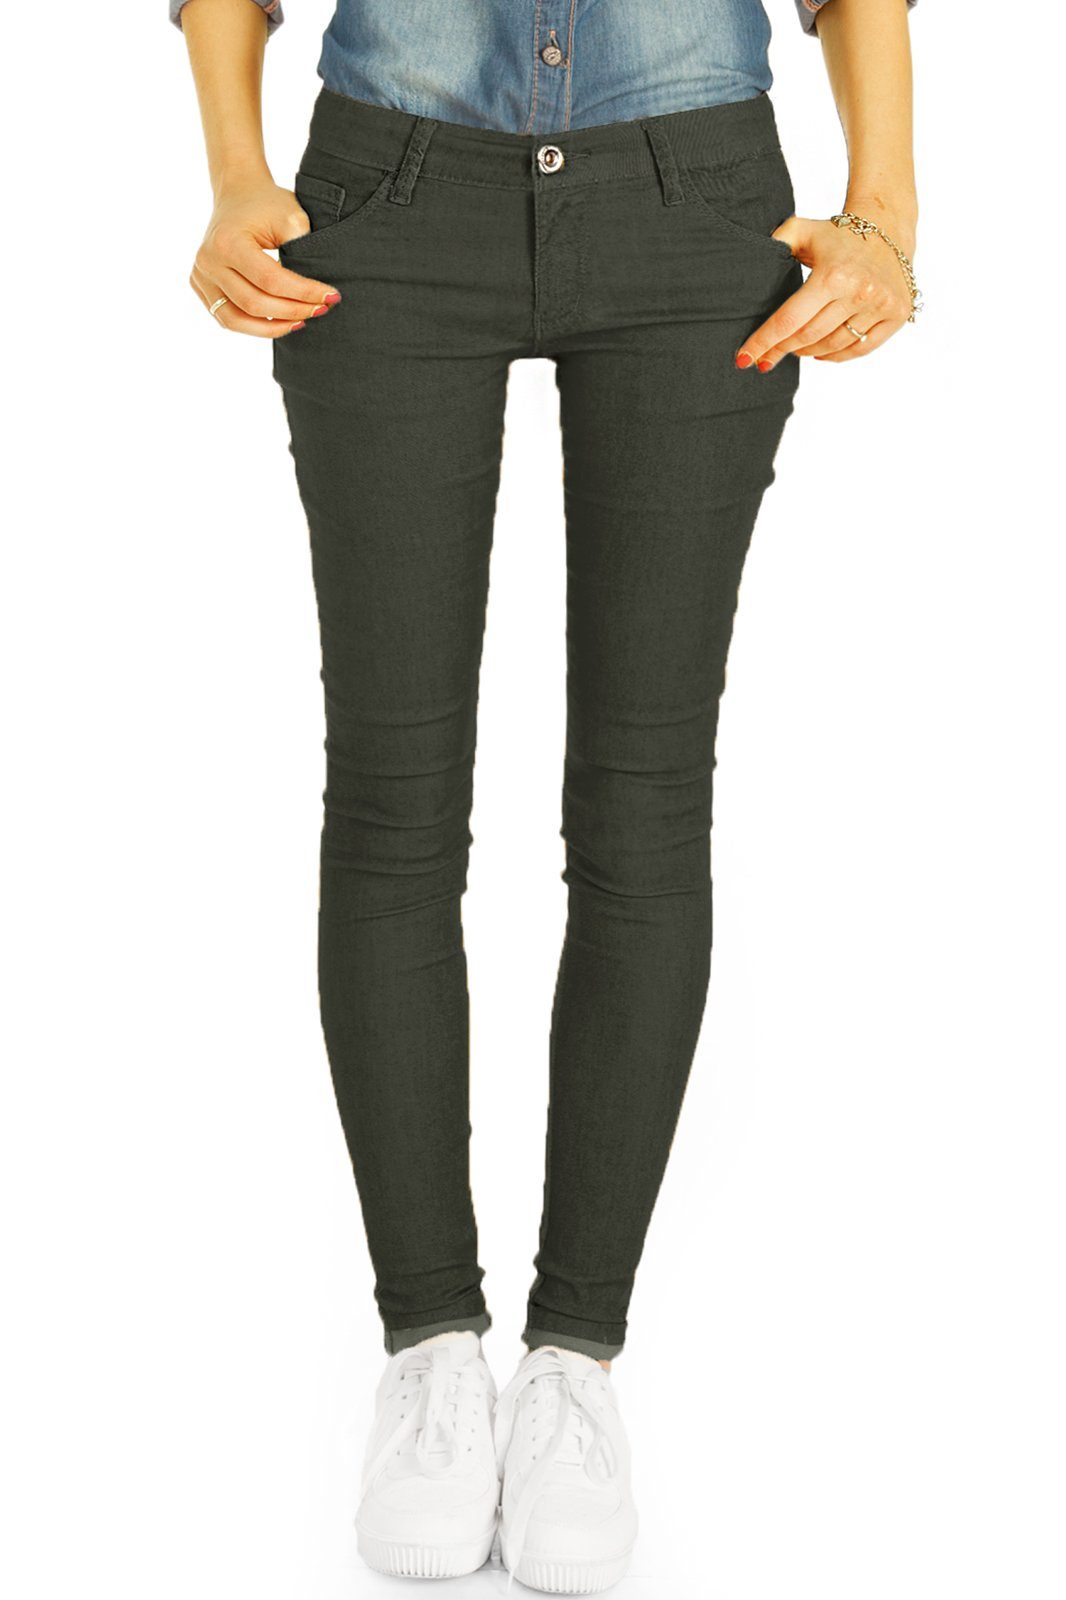 be styled Skinny-fit-Jeans Super Skinny Strecht Hüftjeans Hose - niedrige Bundhöhe - j18i-2 mit Stretch-Anteil, 5-Pocket-Style, low waist, hüftig, niedrige Leibhöhe, Skinny Passform dunkelgrün